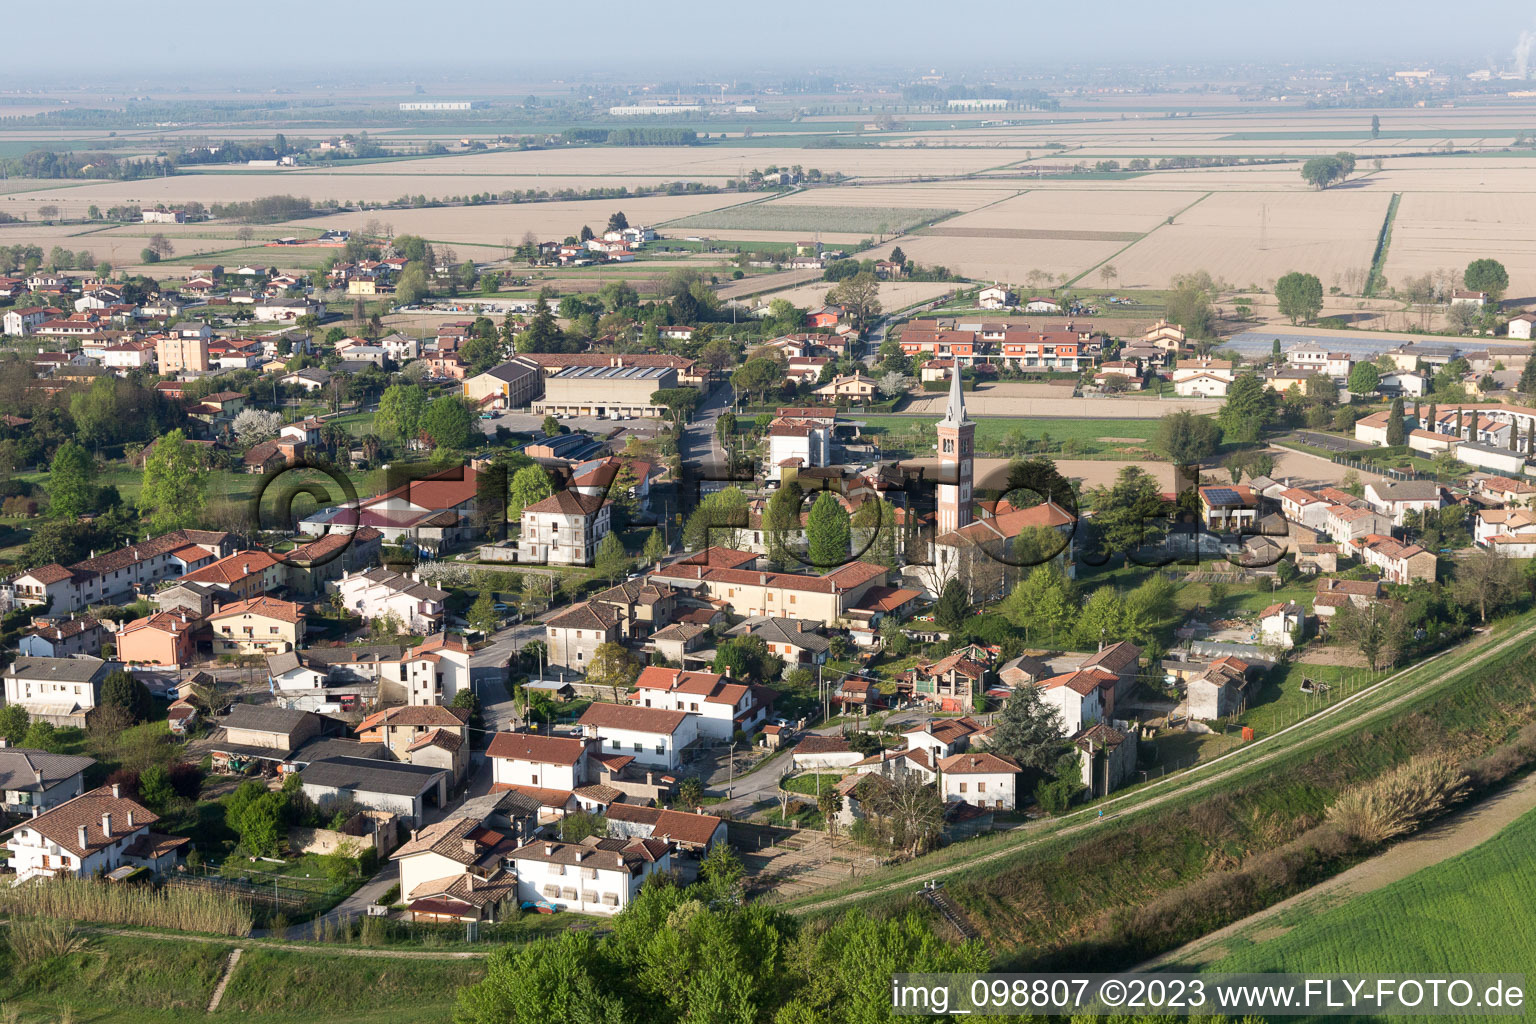 Aerial view of Latisanotta in the state Friuli Venezia Giulia, Italy